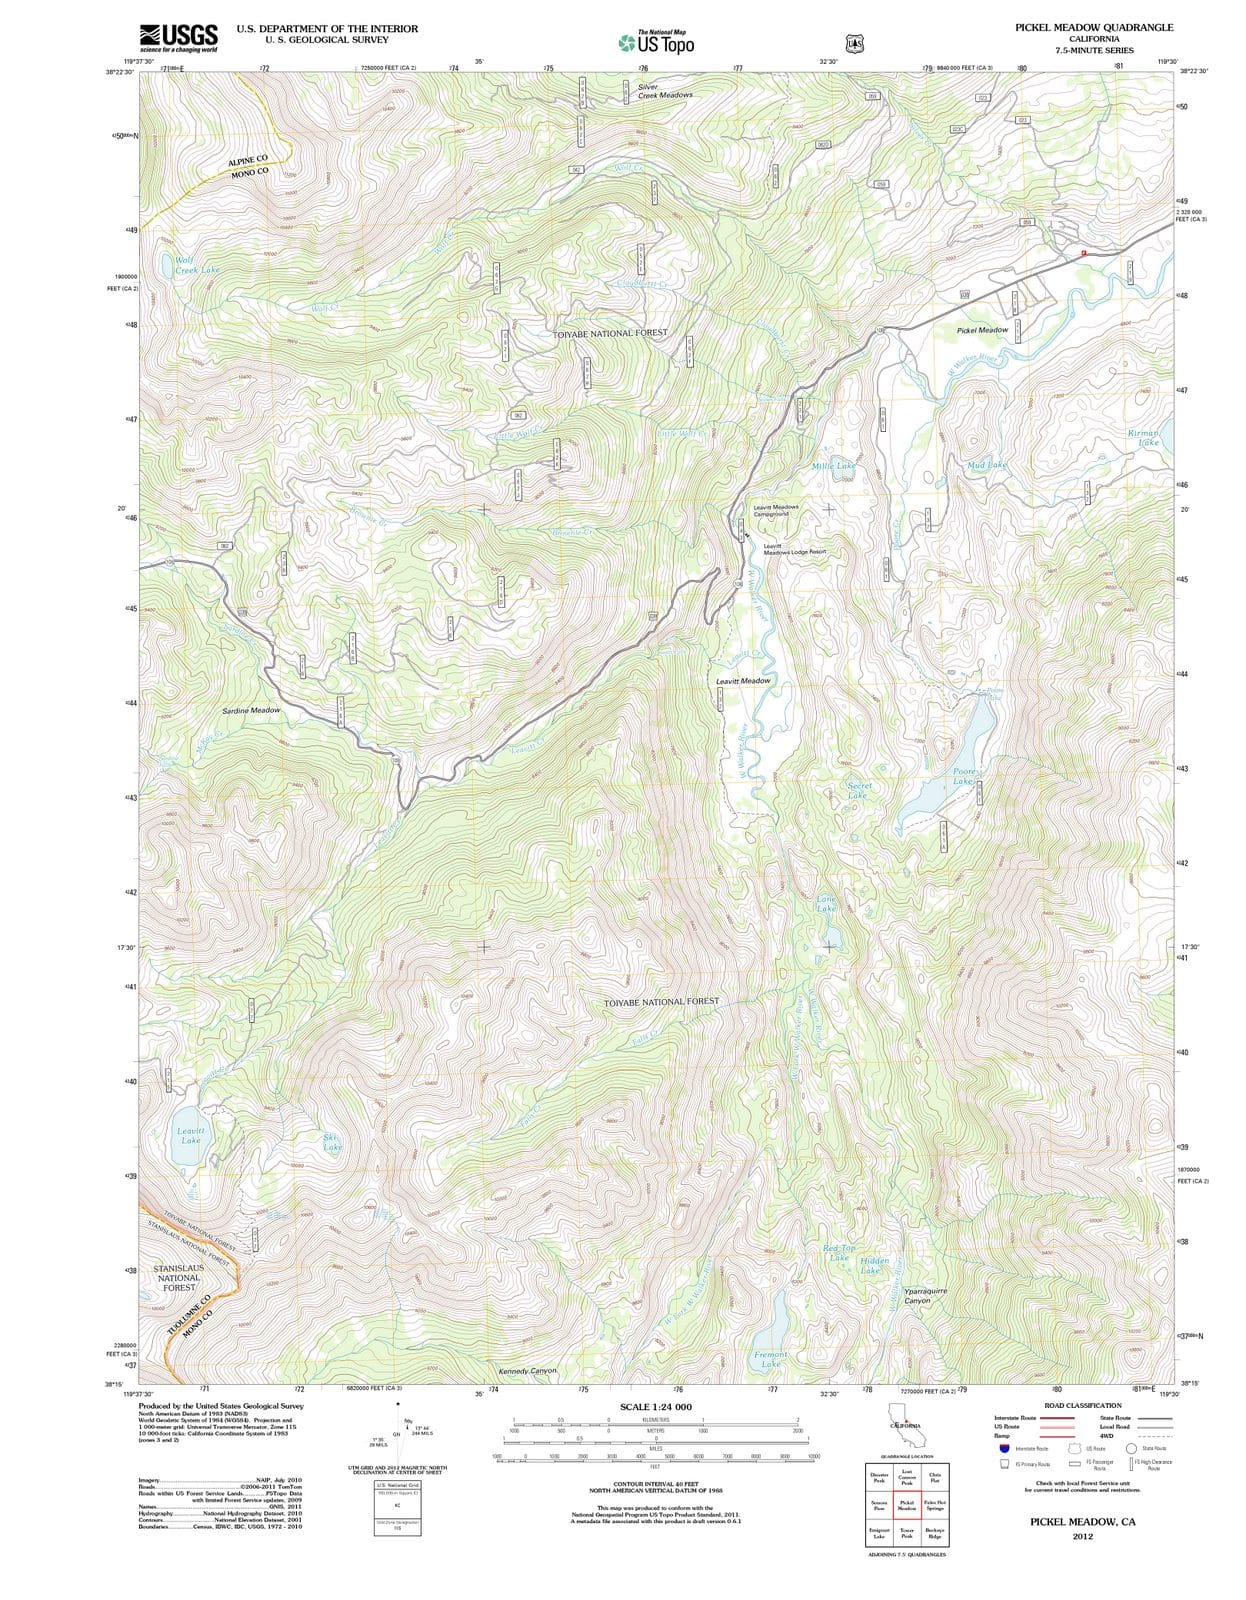 2012 Pickel Meadow, CA - California - USGS Topographic Map